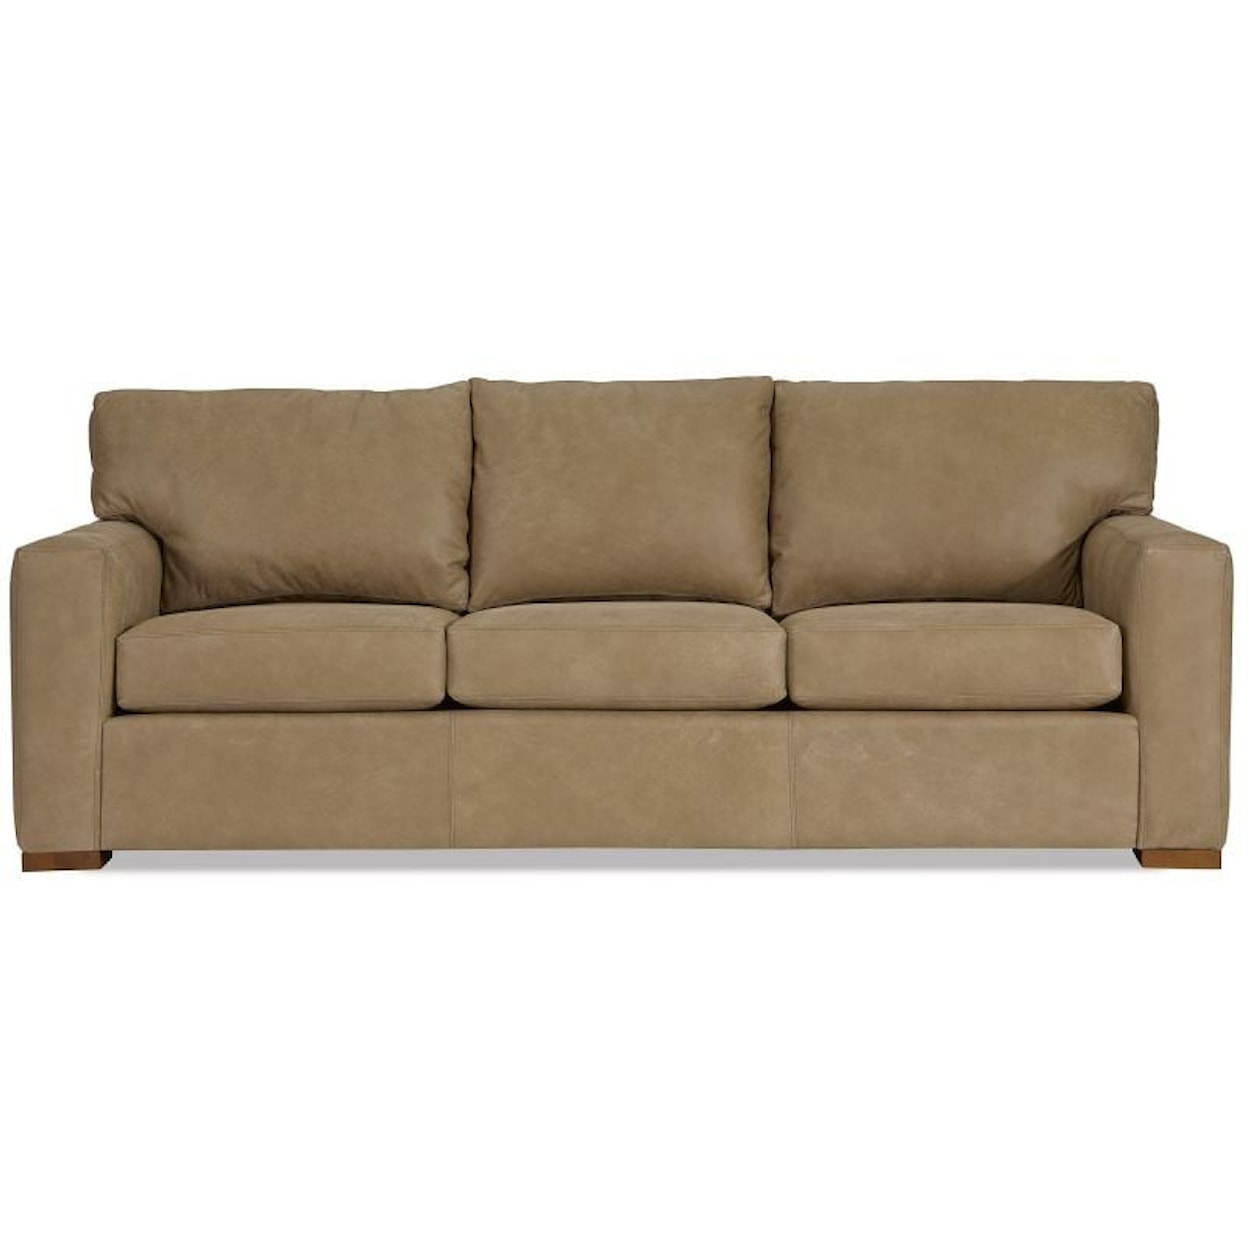 Lancer 850 3-Seat Leather Sofa